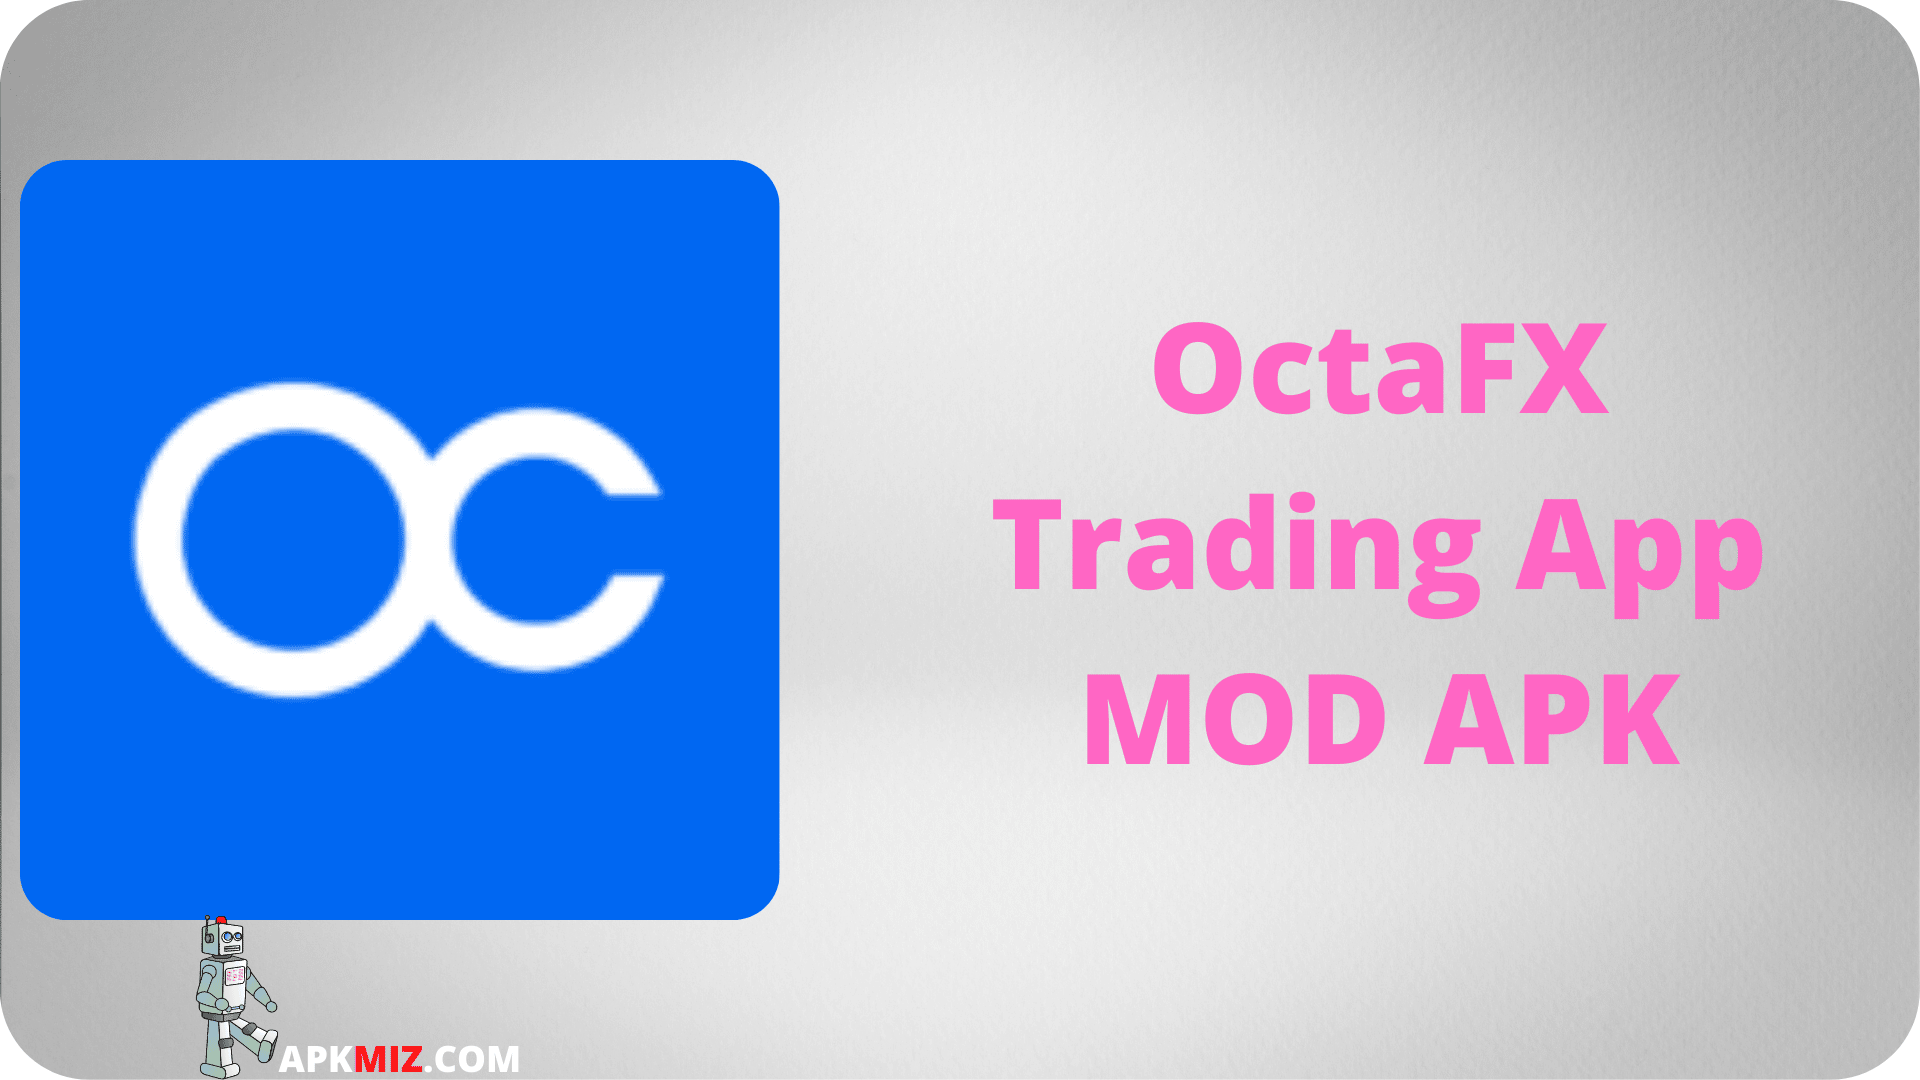 OctaFX Trading App MOD APK